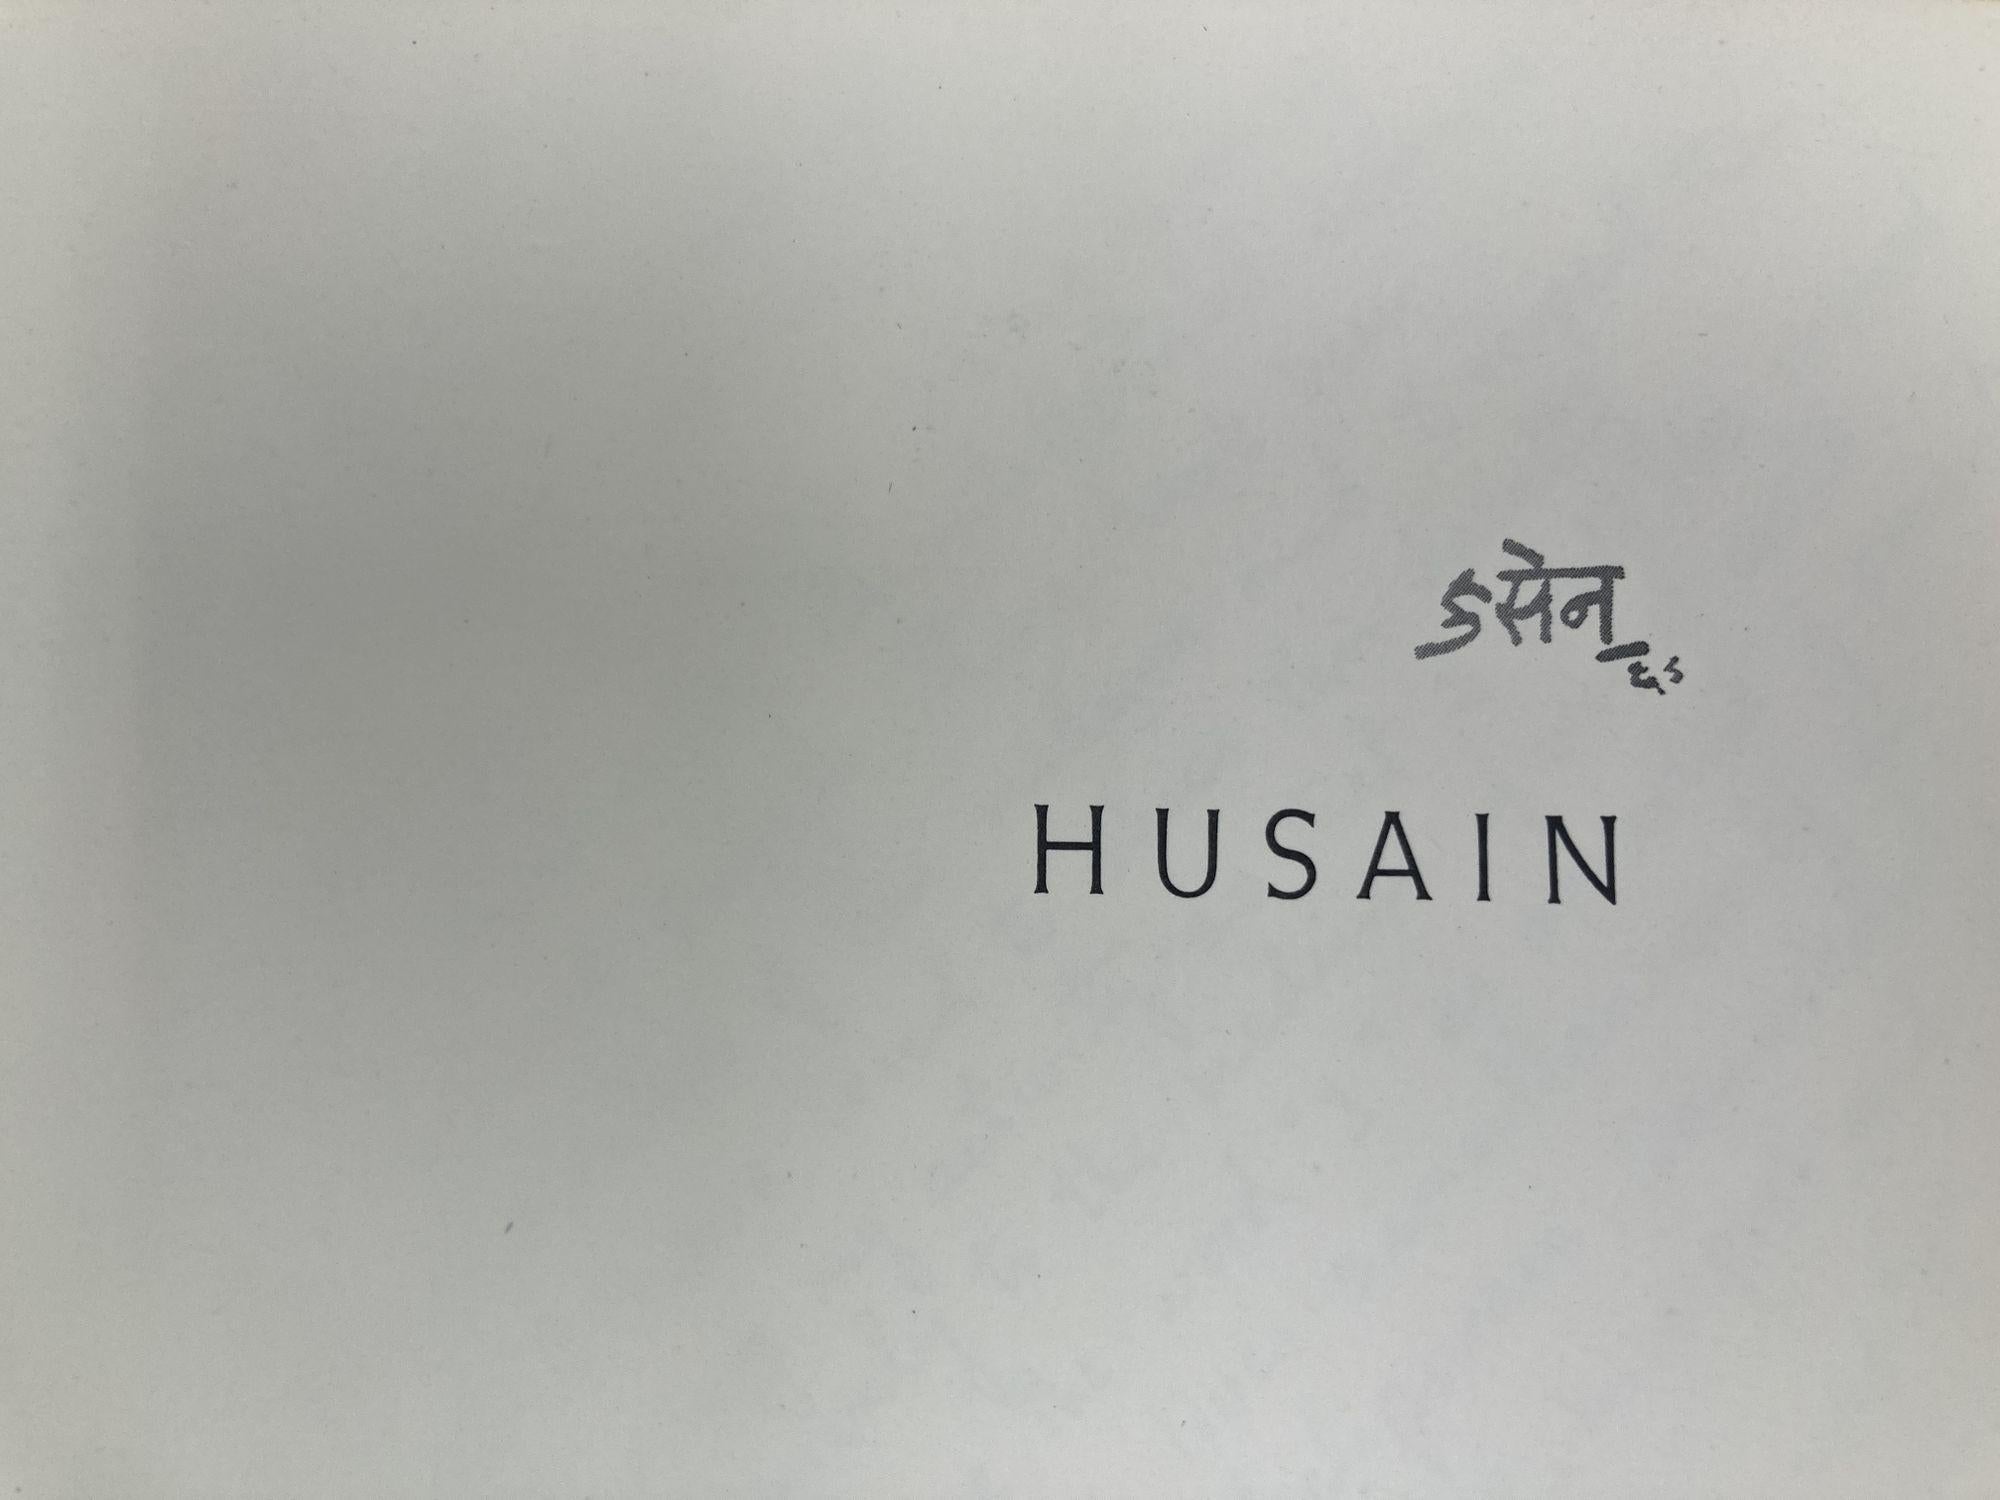 Husain by Maqbul Fida Husain, Richard Bartholomew, Shiv S. Kapur, H. N. Abrams In Good Condition For Sale In North Hollywood, CA